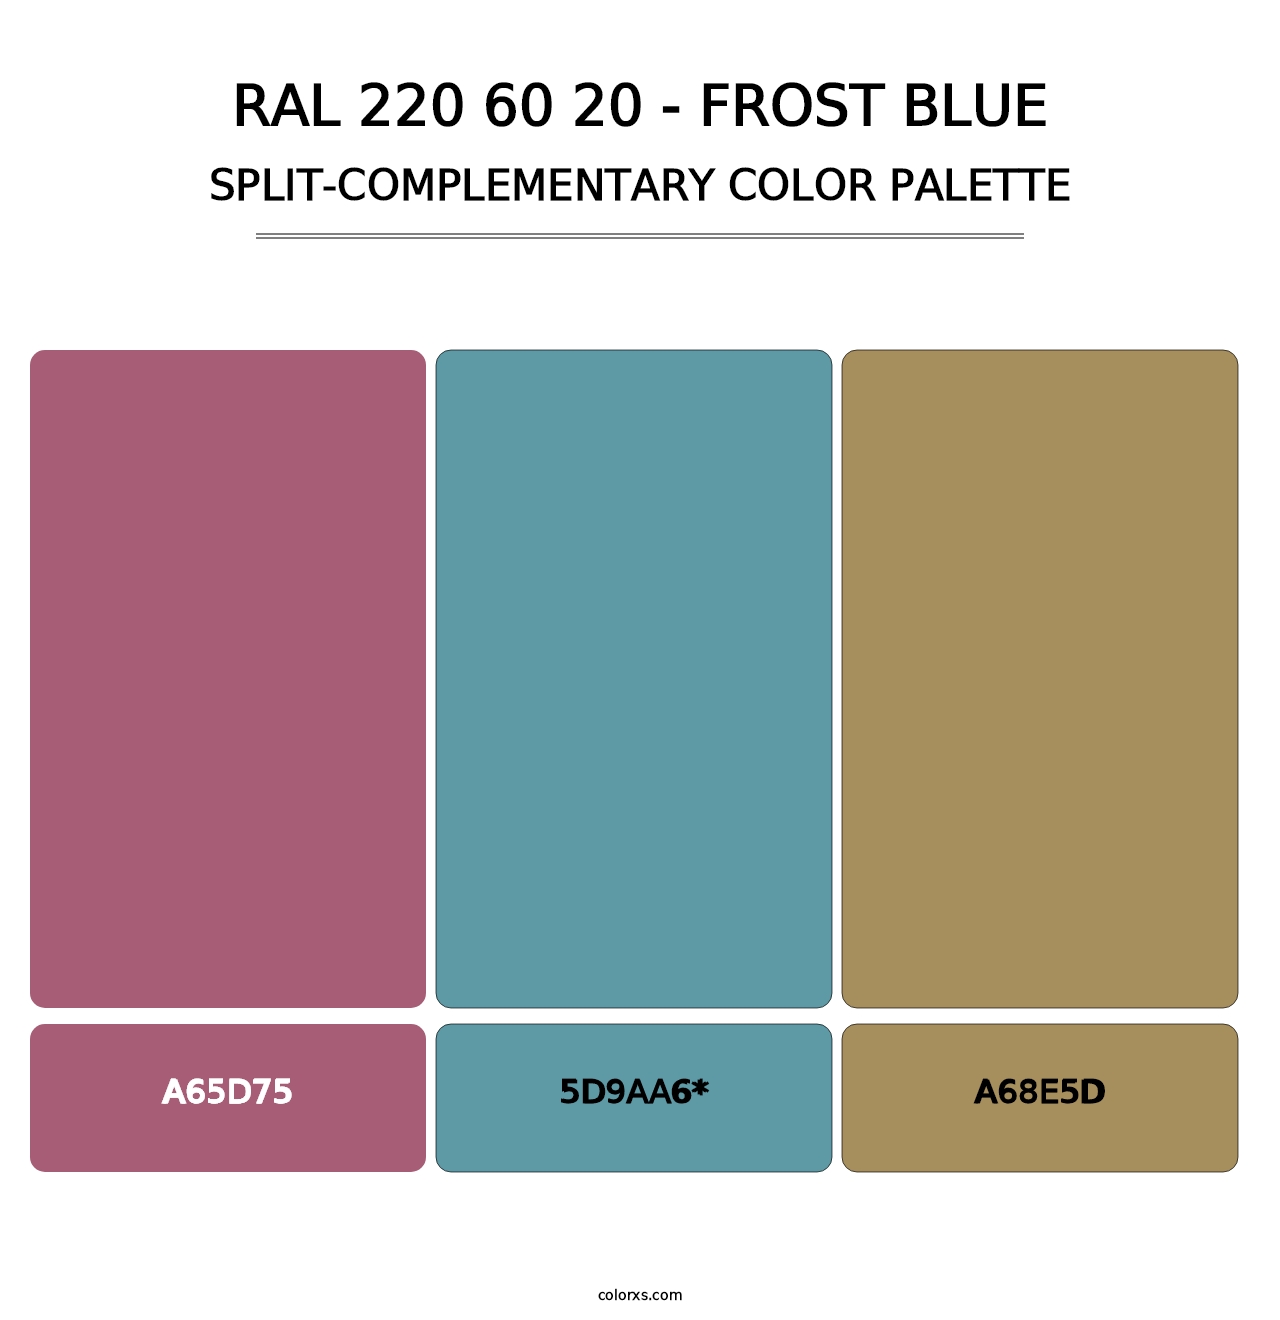 RAL 220 60 20 - Frost Blue - Split-Complementary Color Palette